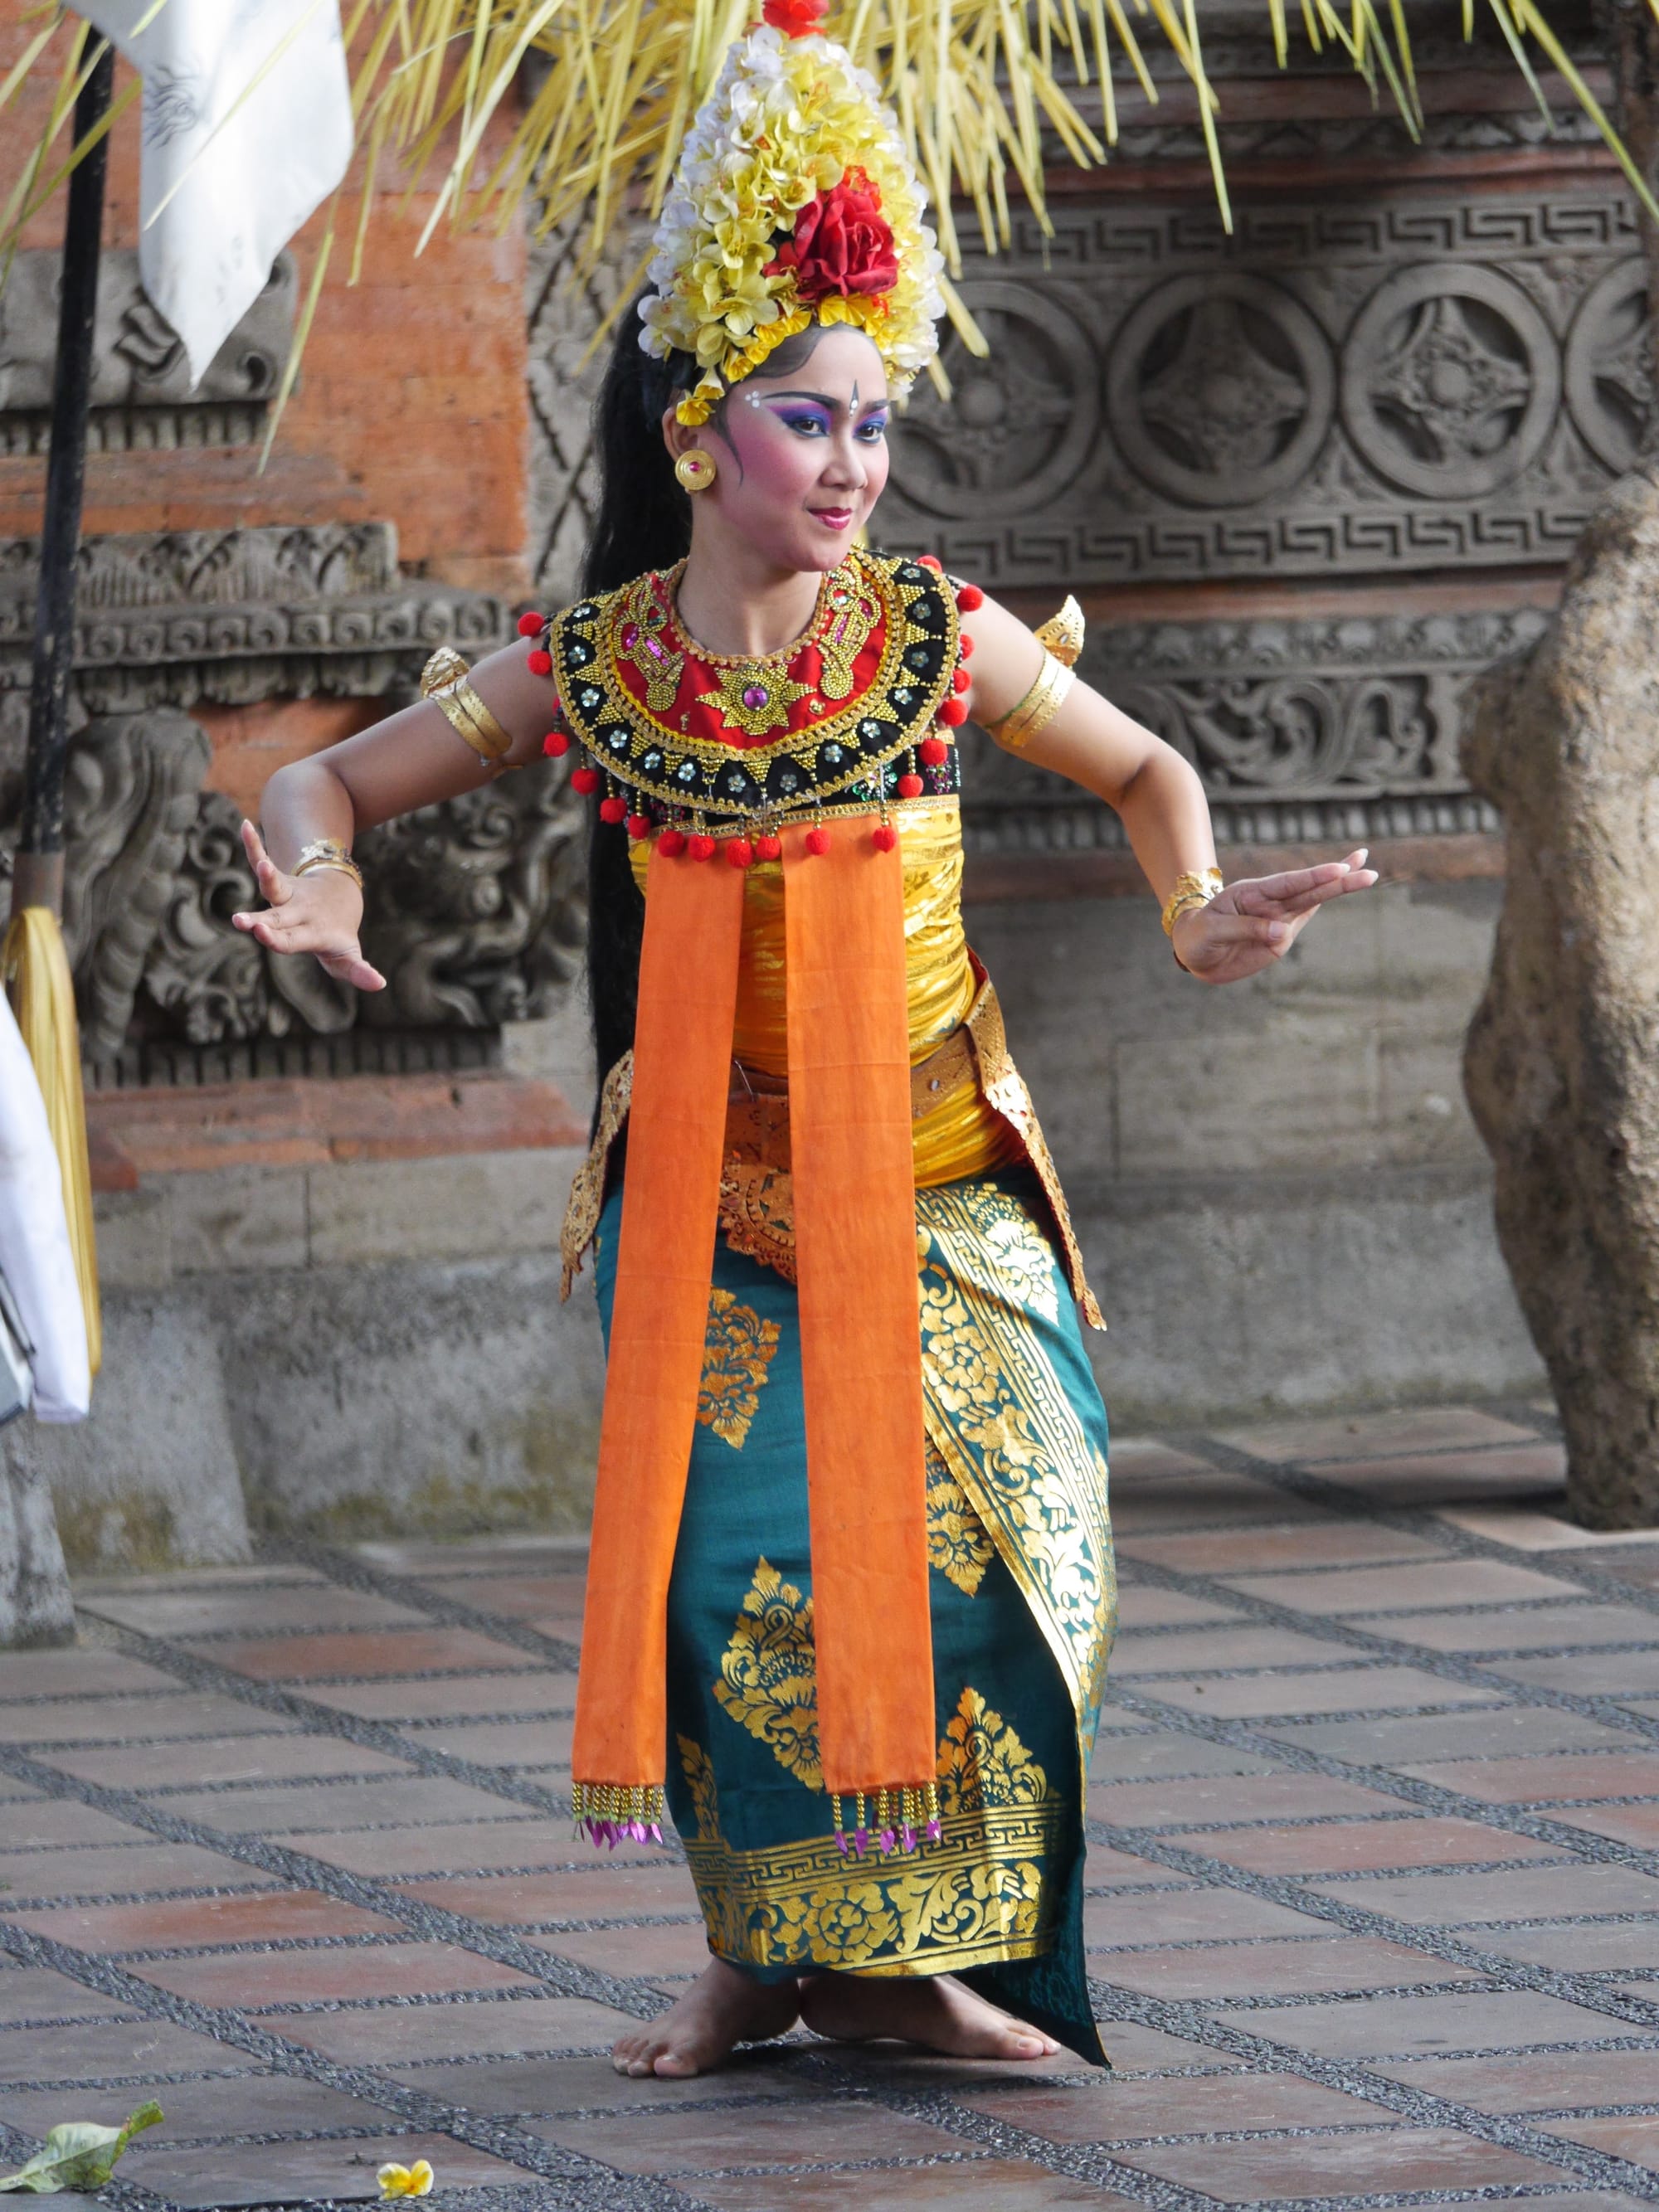 Photo by Author — servant of Rangda — Sahadewa Barong and Kris Dance, Bali, Indonesia